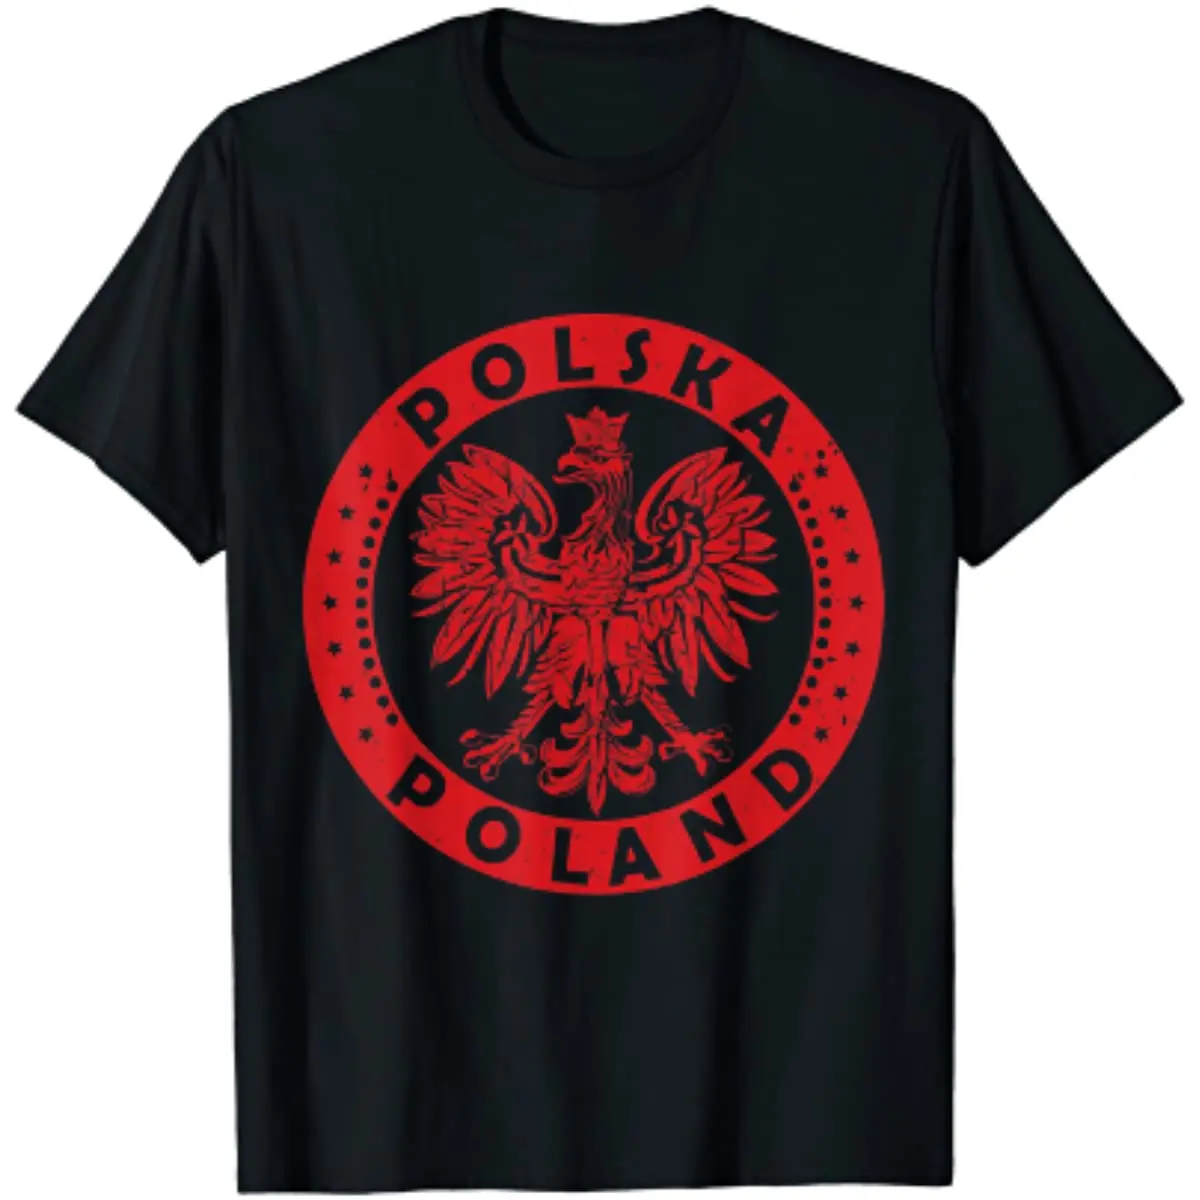 

Polska Poland Polish Eagle Coat of Arms T-Shirt 100% Cotton O-Neck Summer Short Sleeve Casual Mens T-shirt Size S-3XL